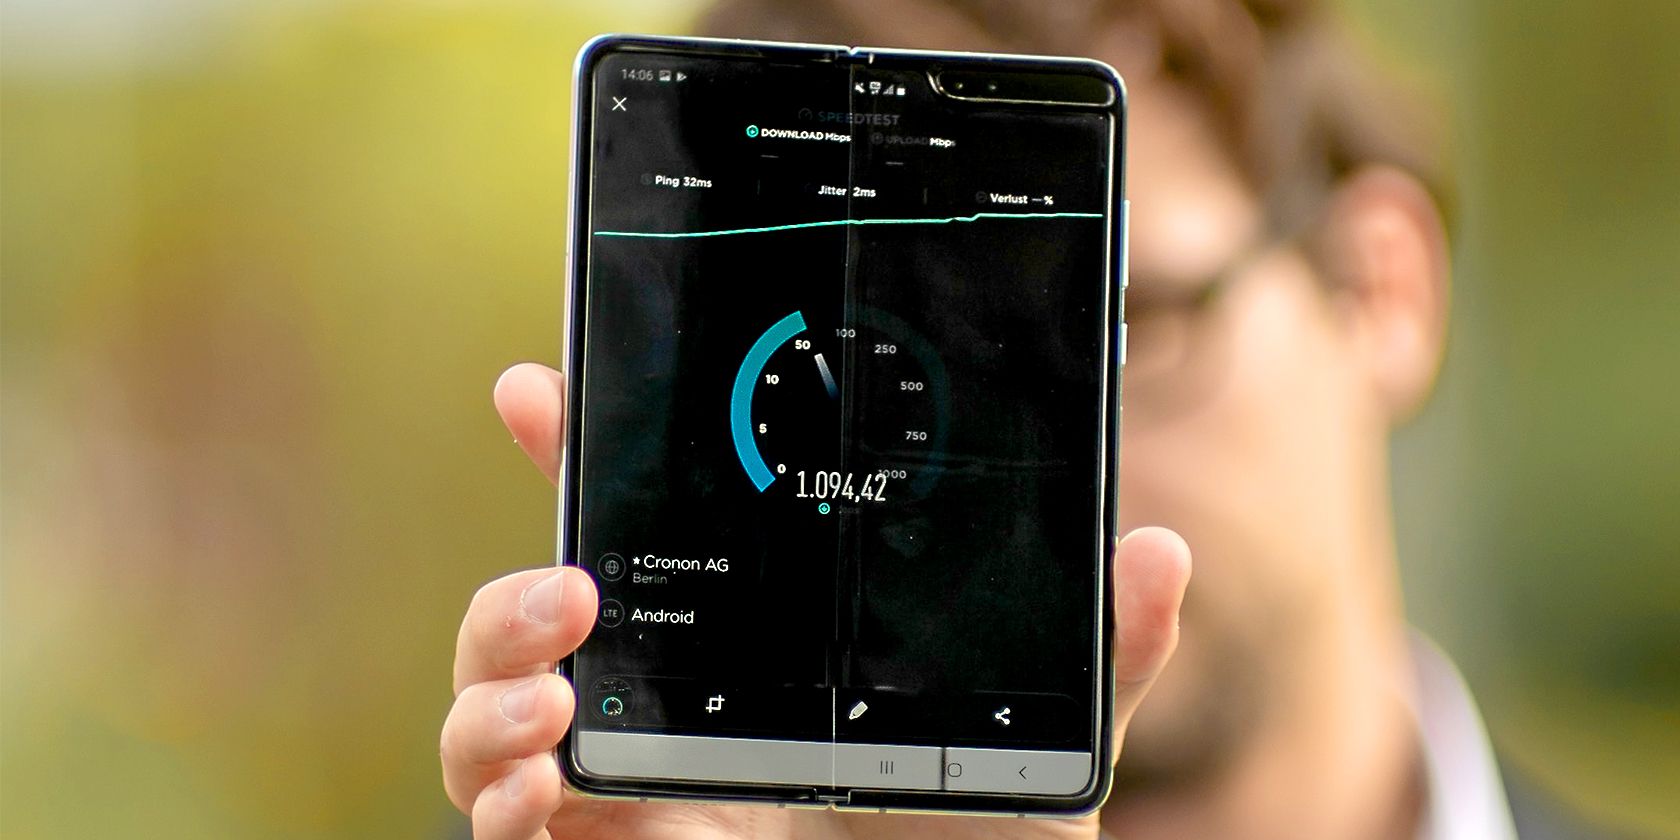 5G speeds on a Samsung Galaxy Z Fold phone